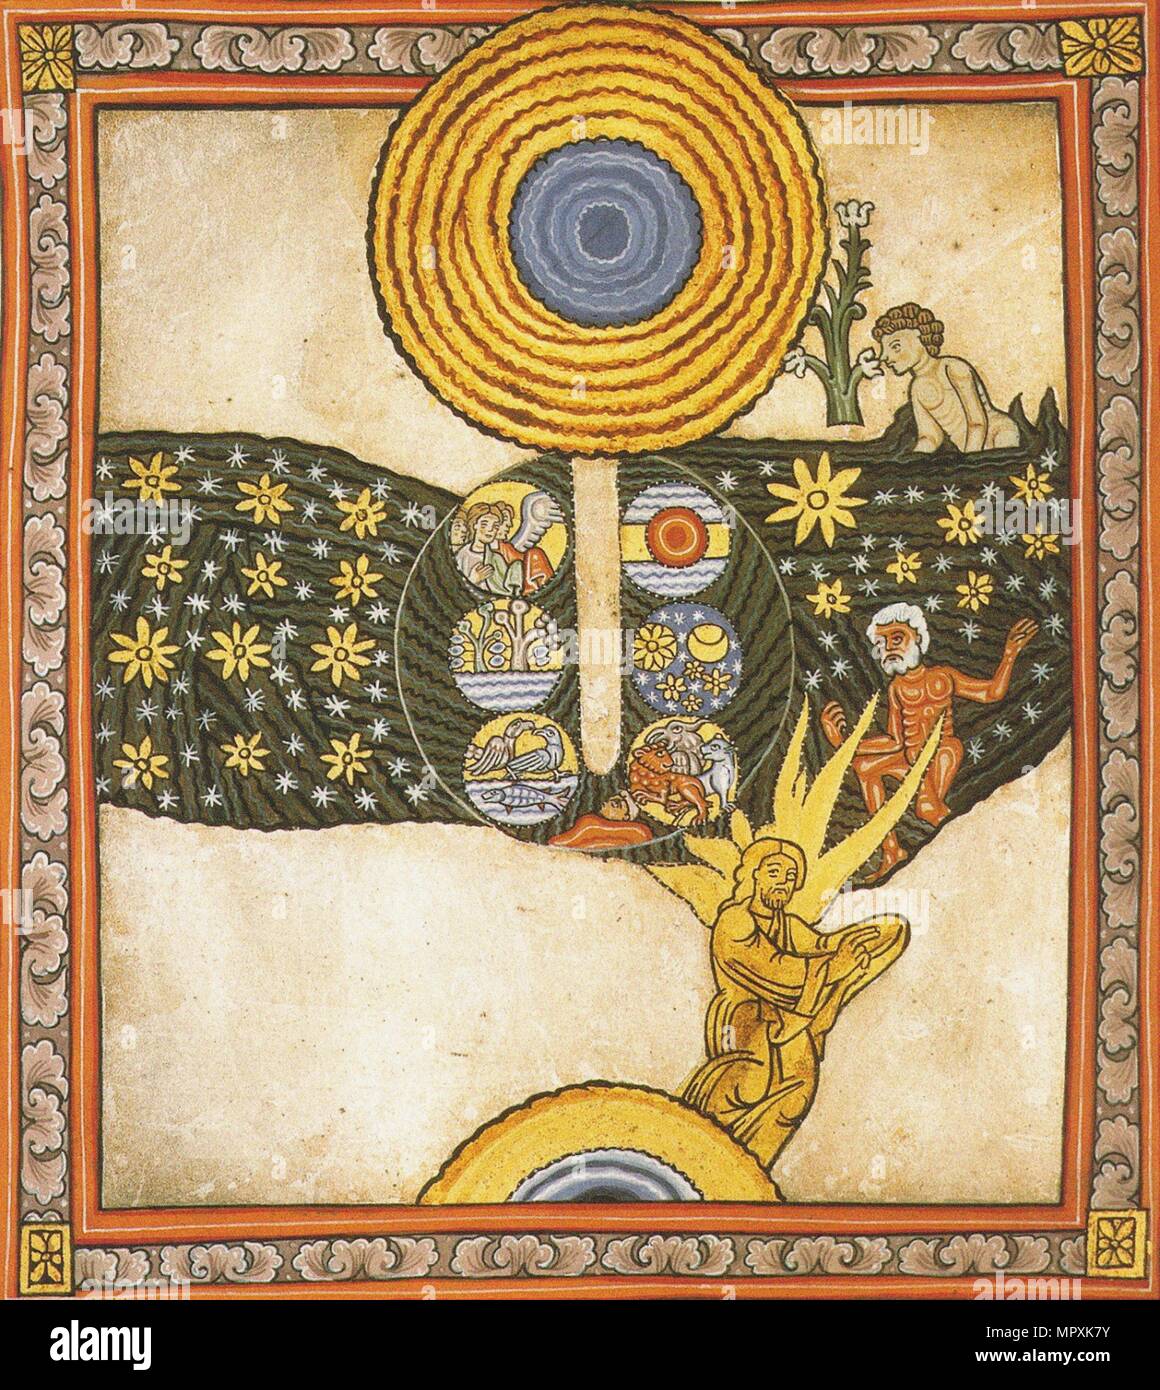 The Redeemer. Miniature from Liber Scivias by Hildegard of Bingen, c. 1175. Stock Photo